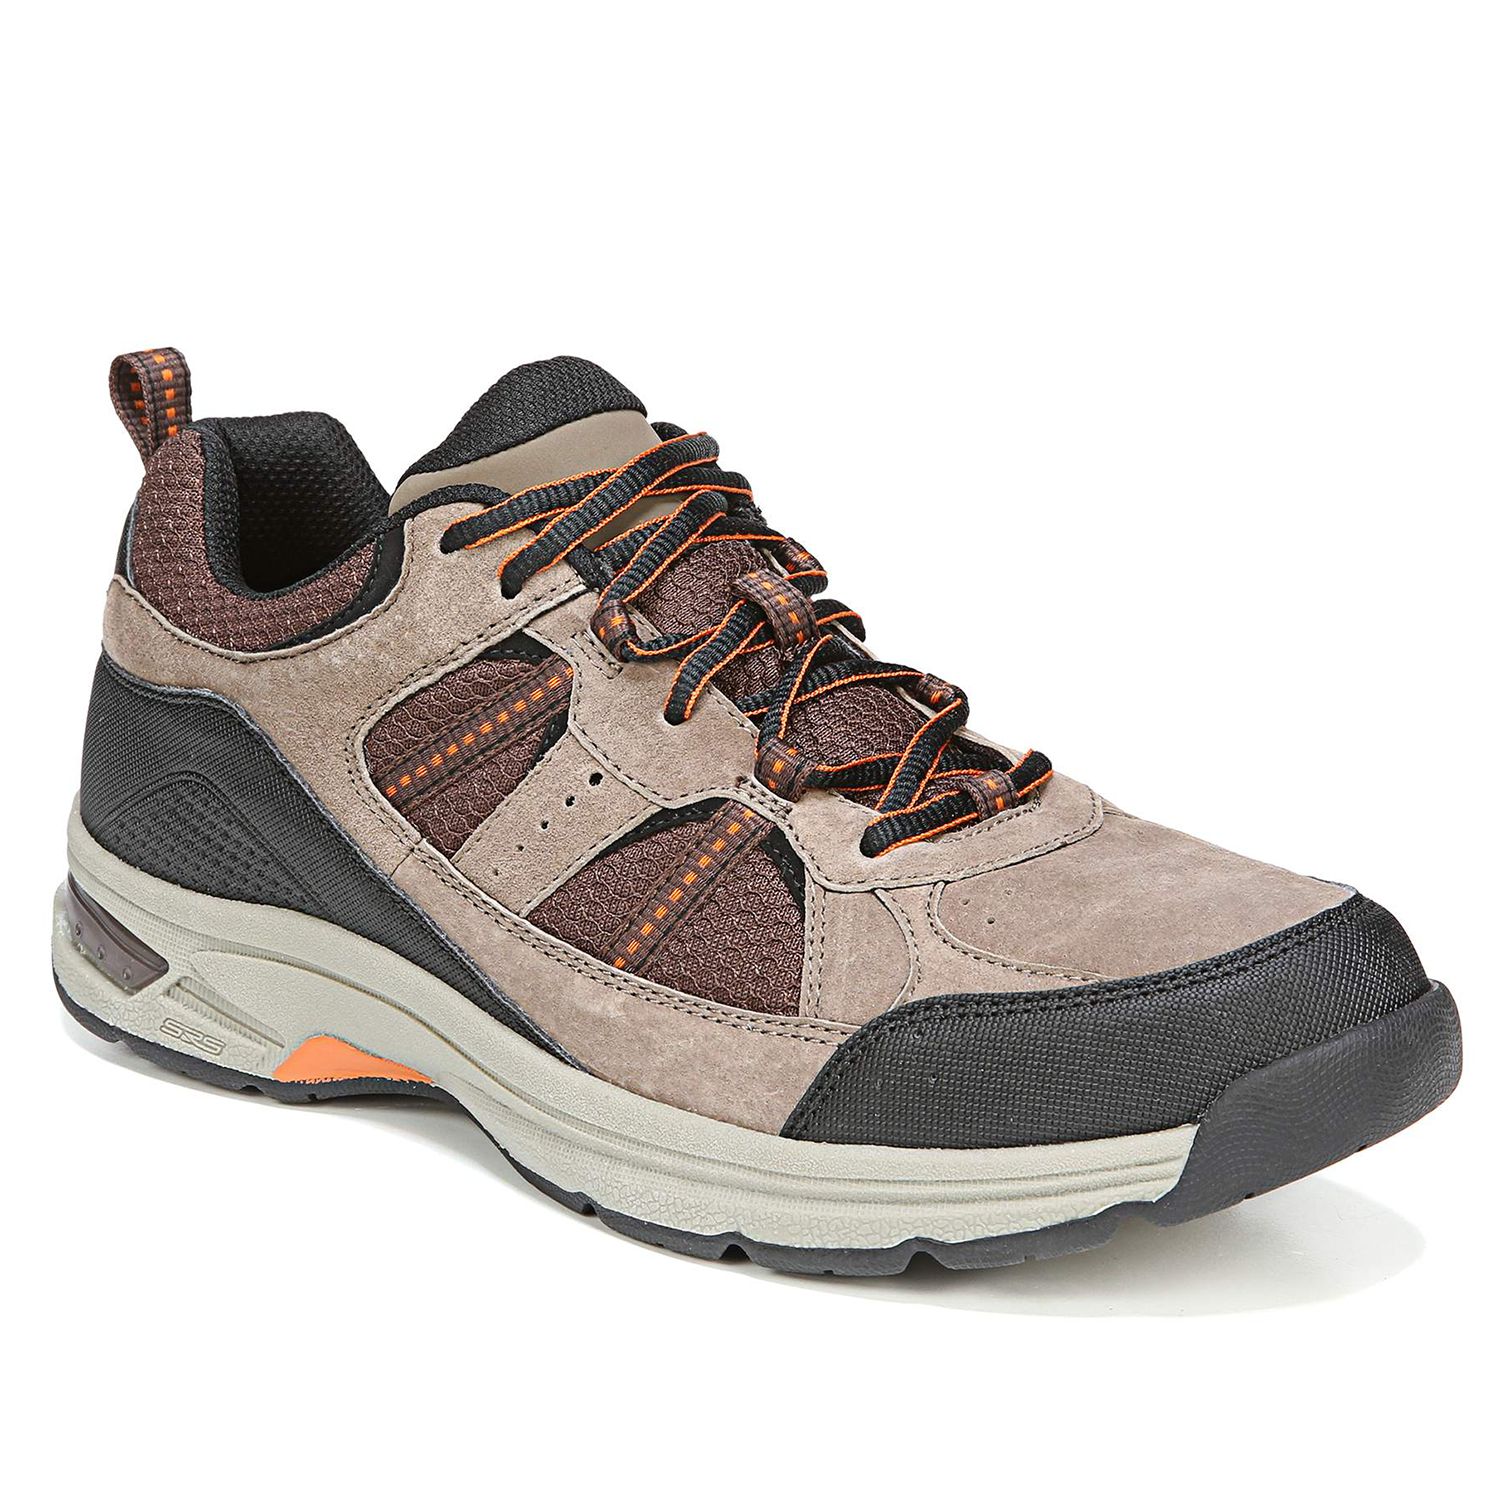 Dr. Scholl's Trail 830 Men's Hiking Shoes